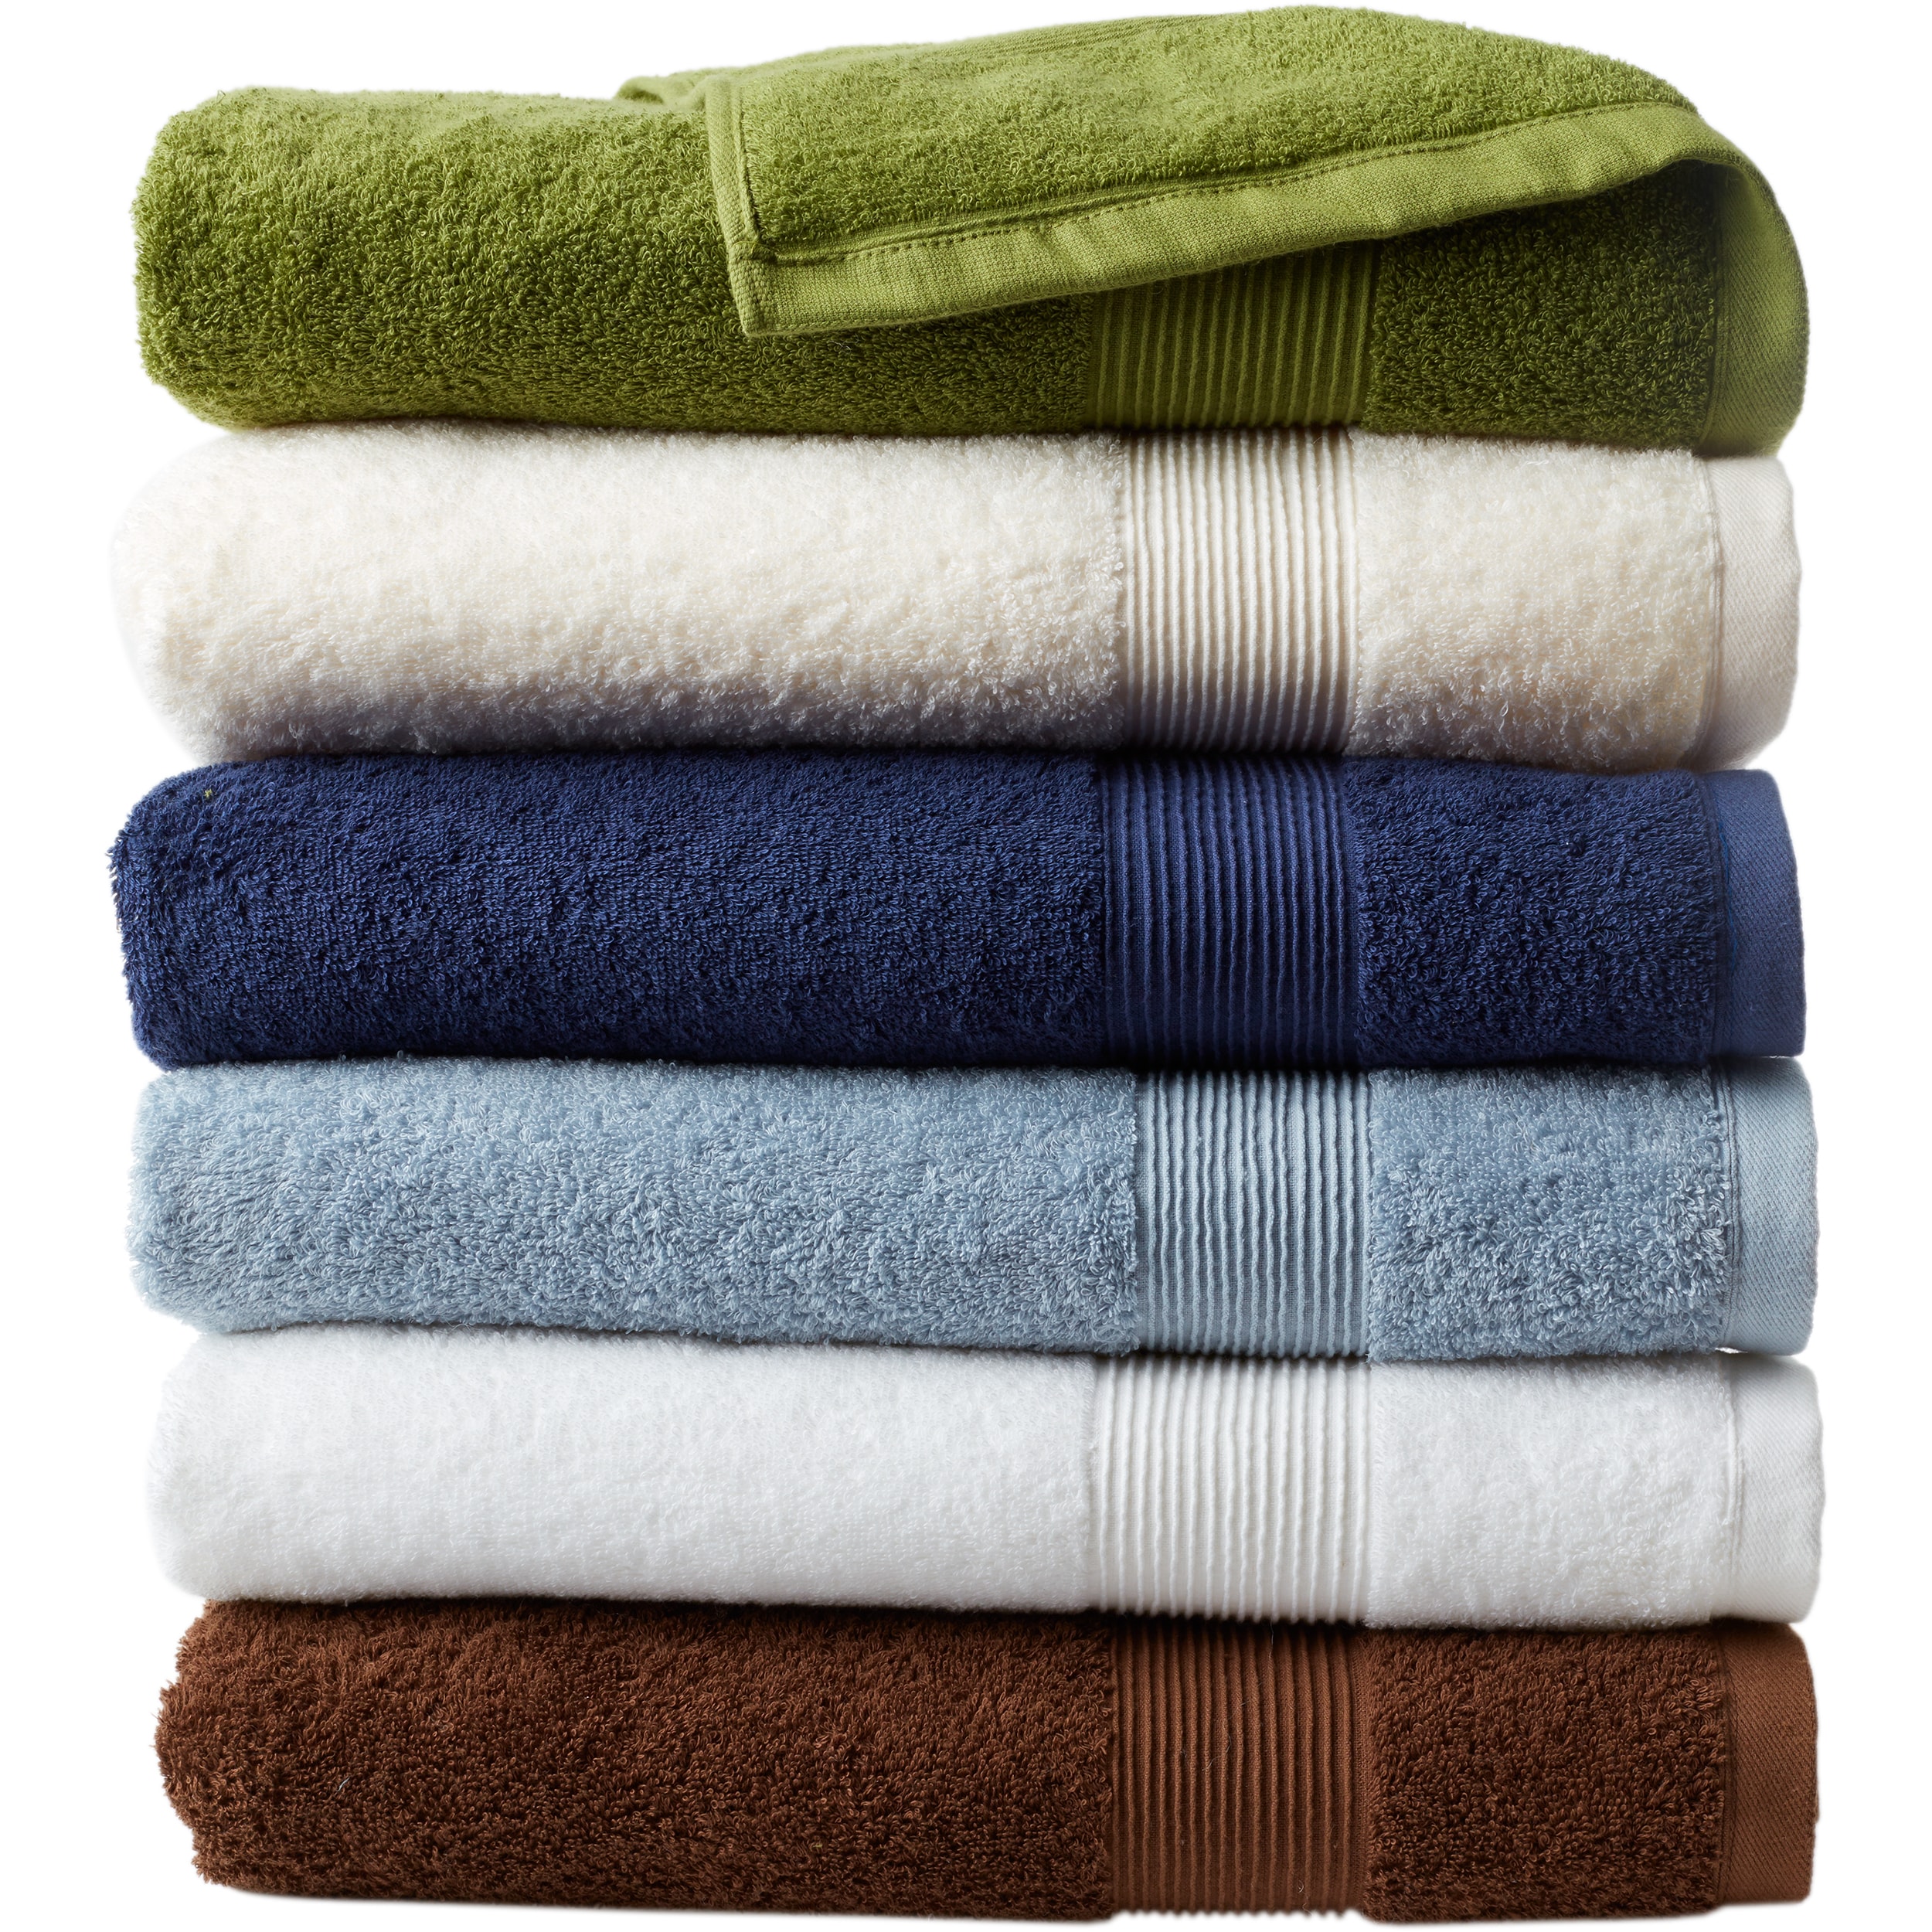 https://ak1.ostkcdn.com/images/products/12539979/Soft-Touch-Cotton-Bath-6-piece-Towel-Set-ae62053f-b34a-4d8d-8ee0-2d21c67440e1.jpg